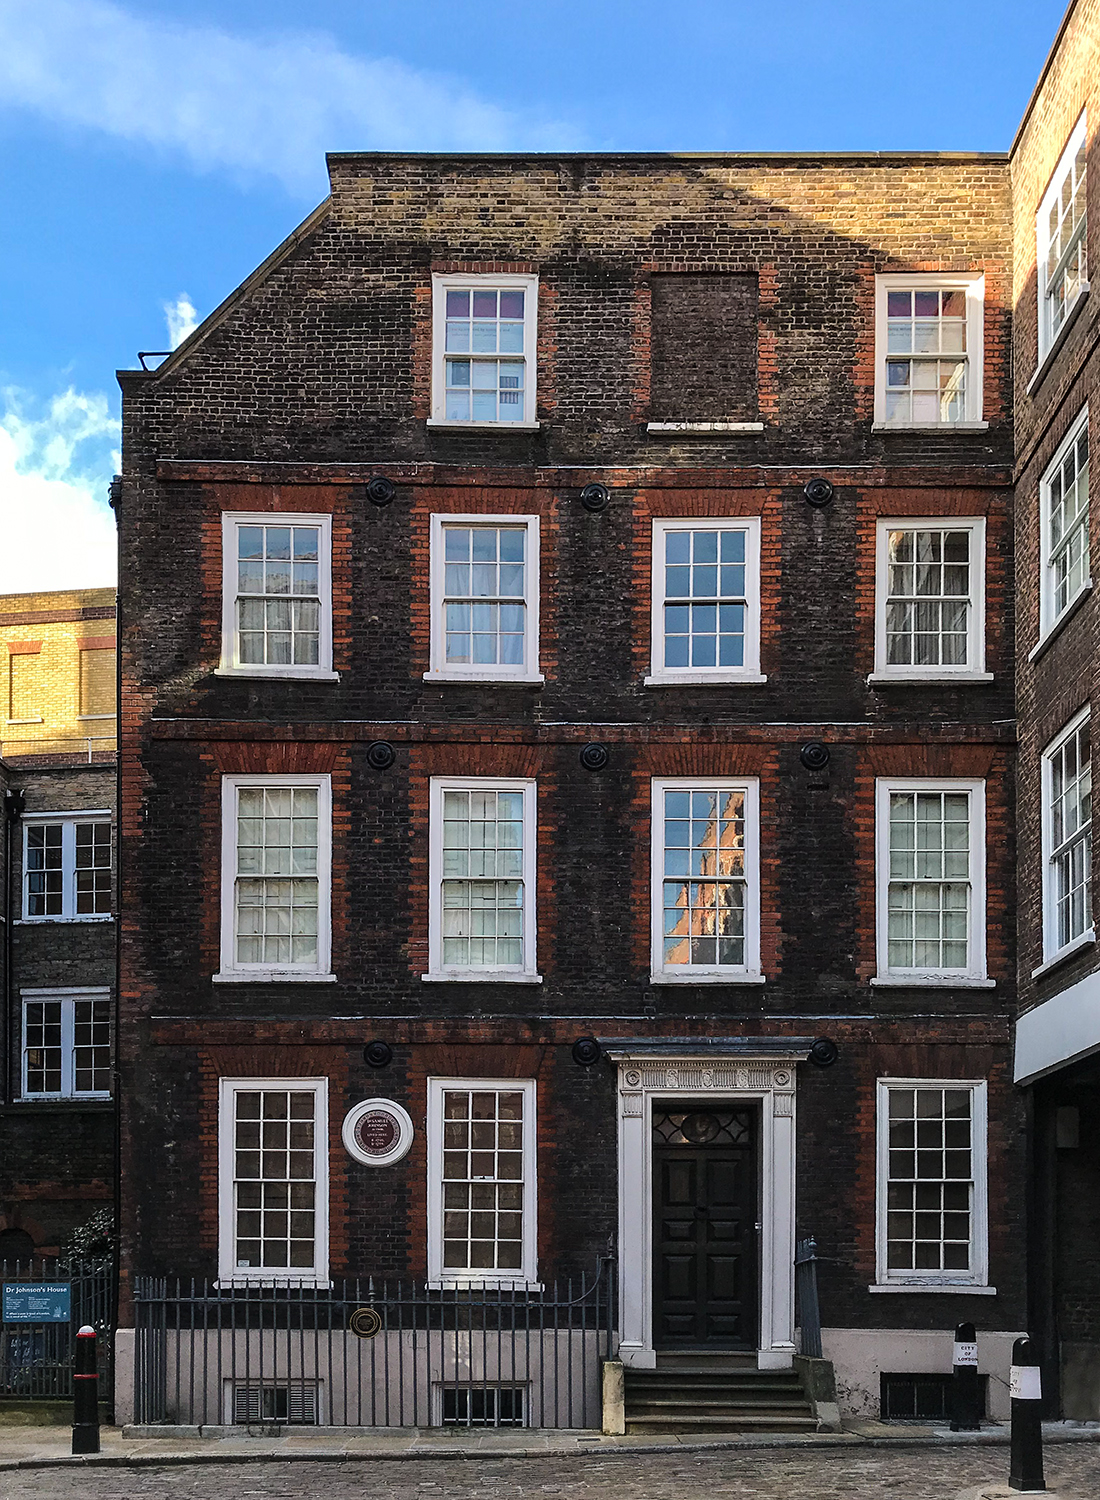 Dr Samuel Johnson's house, 17 Gough Square